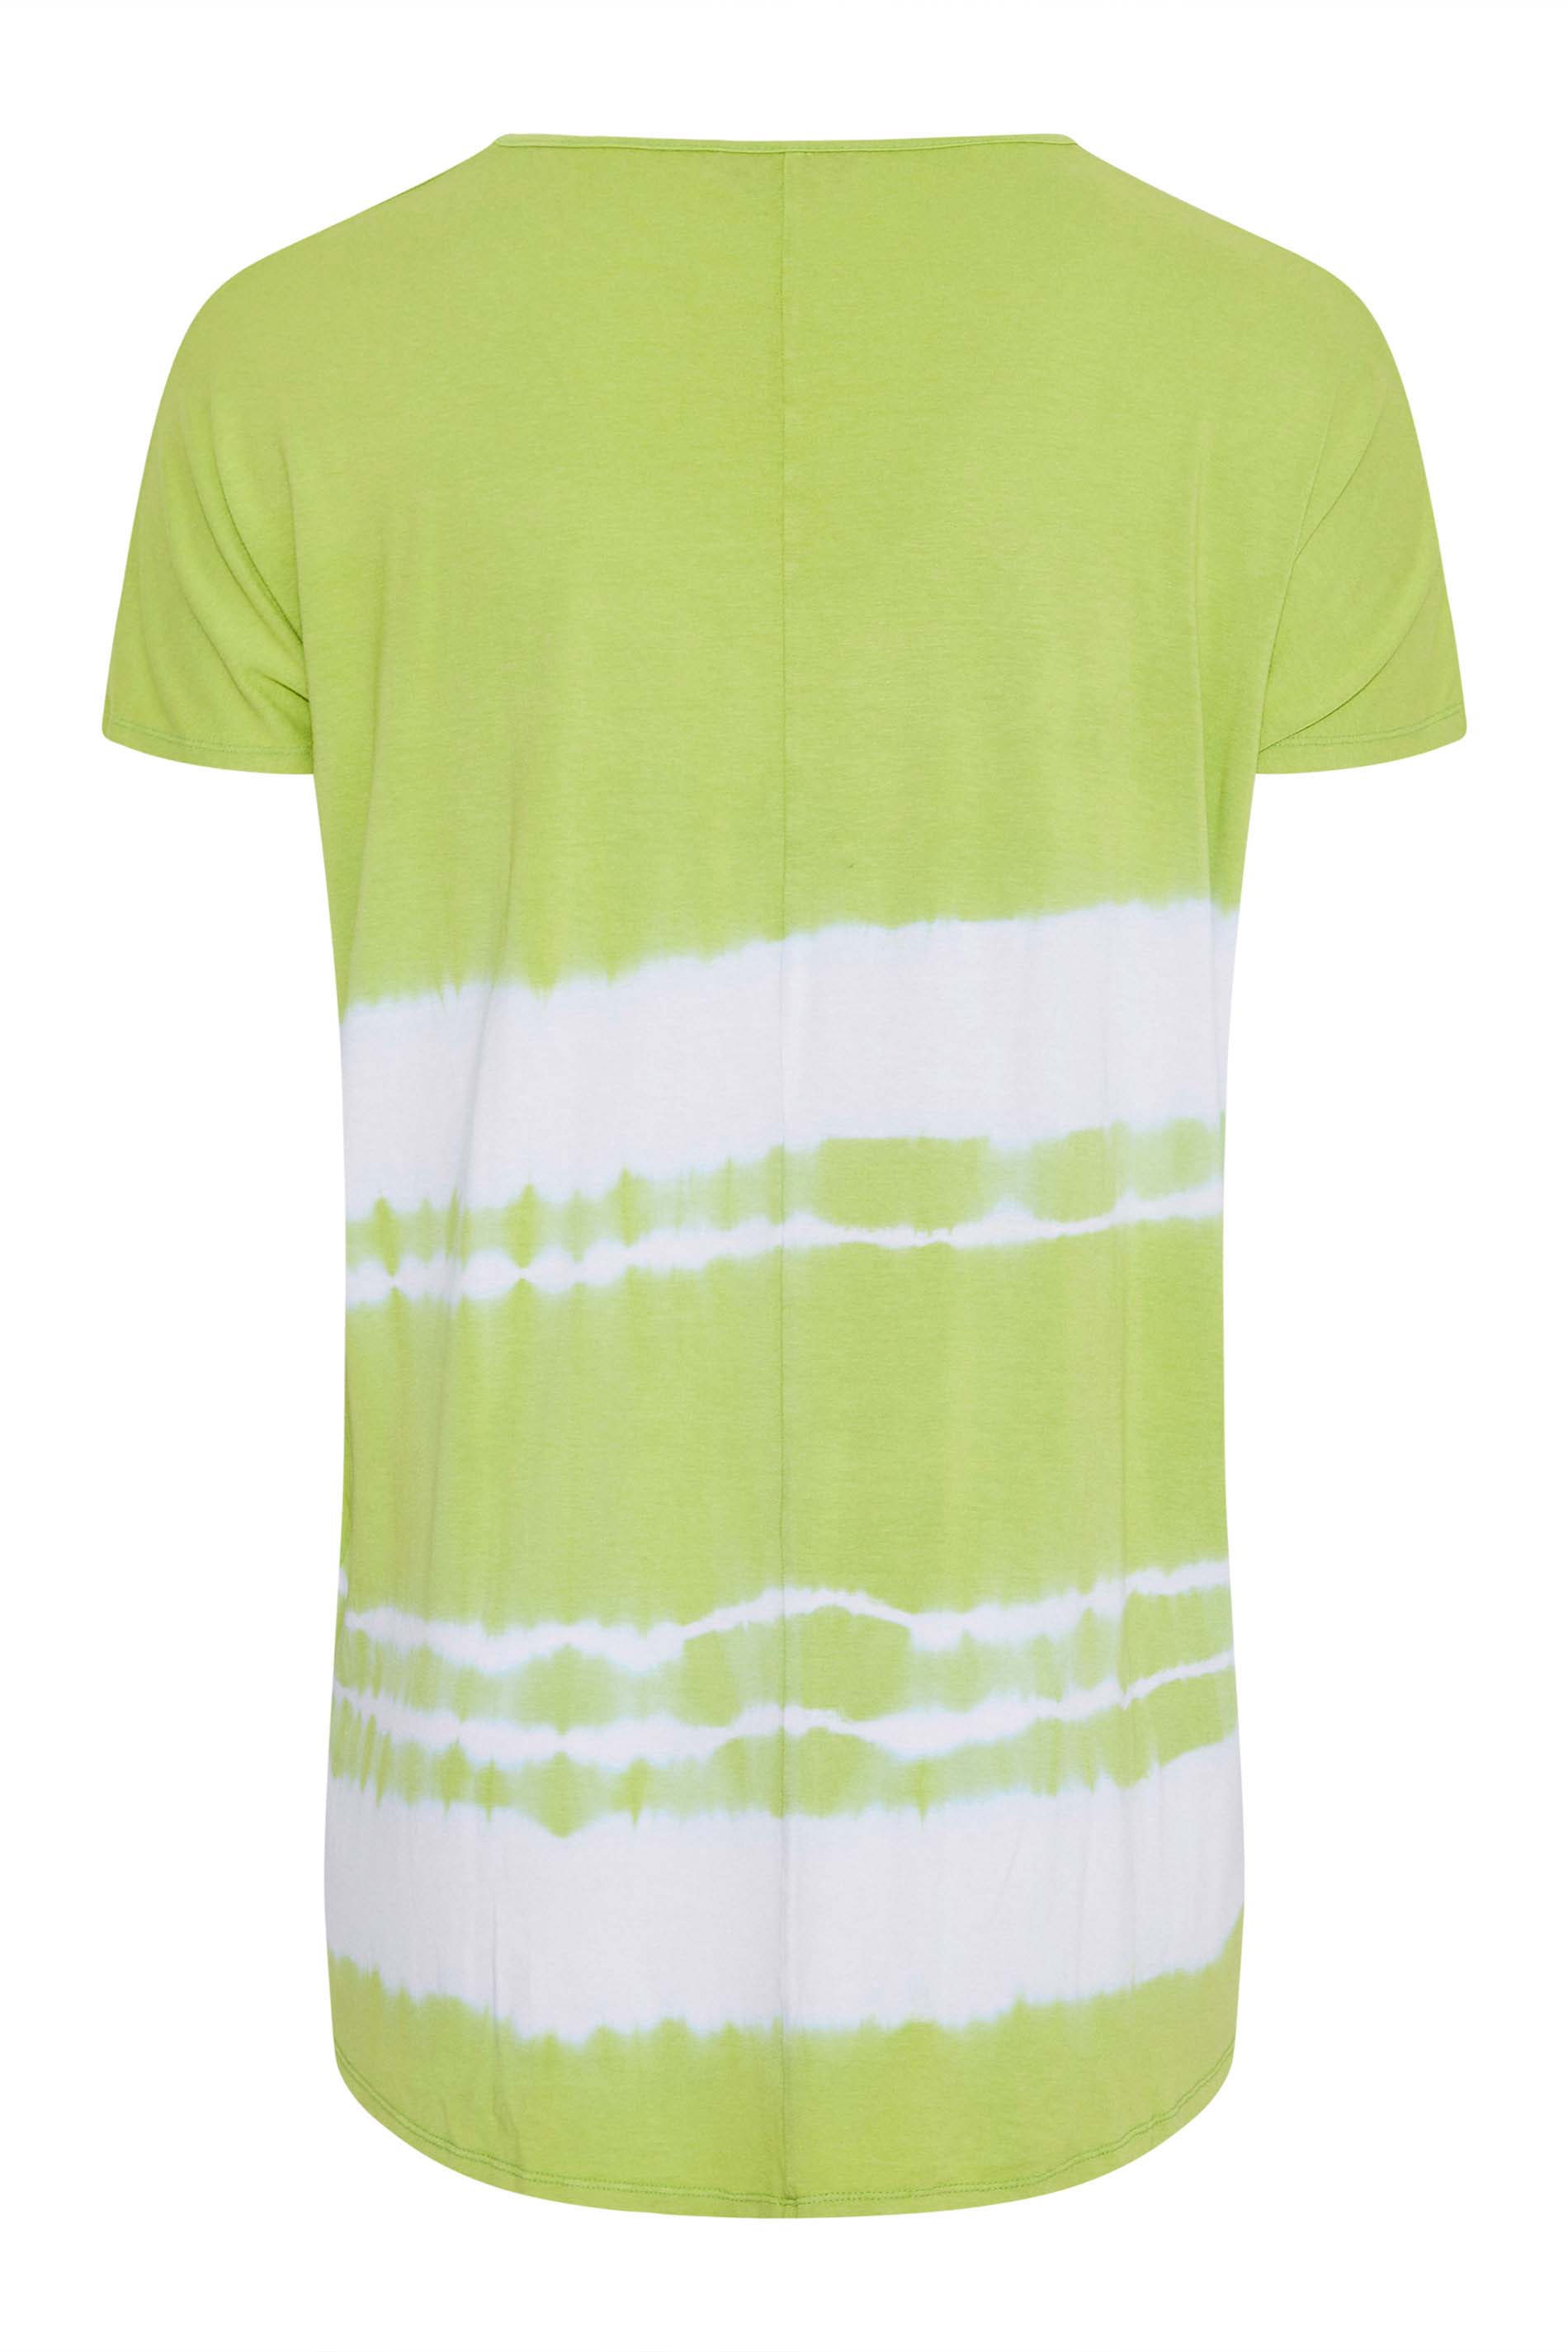 Grande taille  Tops Grande taille  T-Shirts | T-Shirt Vert Citron Tie & Dye en Jersey - MA05910